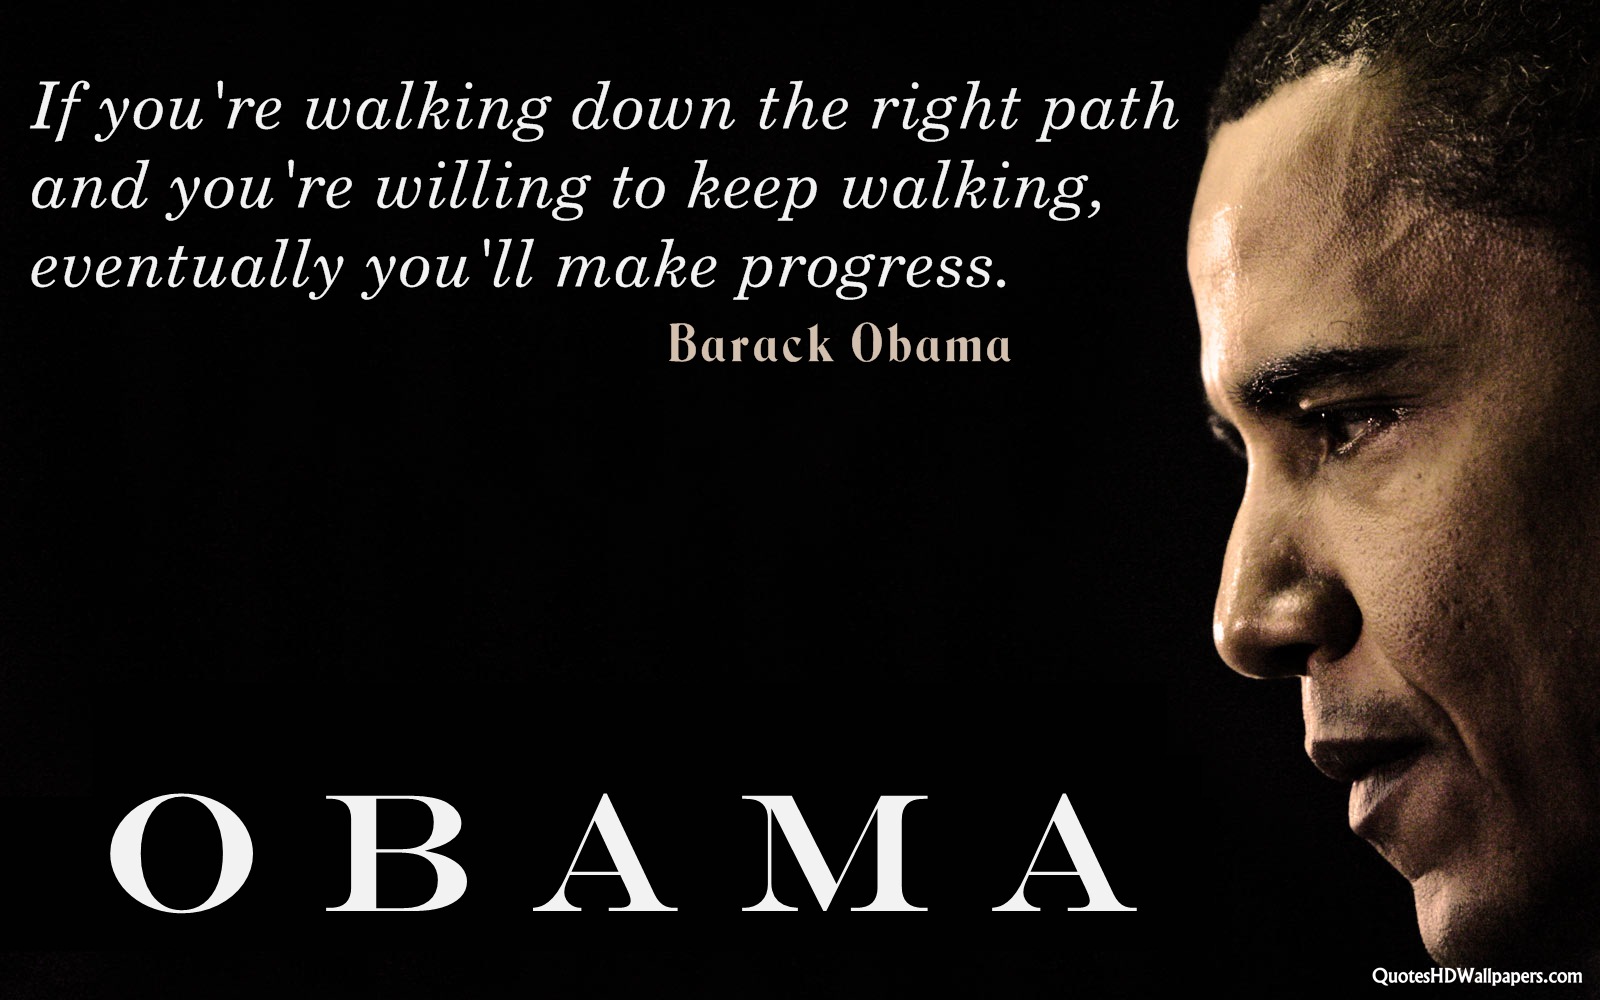 Barack Obama Motivational And Inspirational Quotes - Famous Poem From Barack Obama - HD Wallpaper 